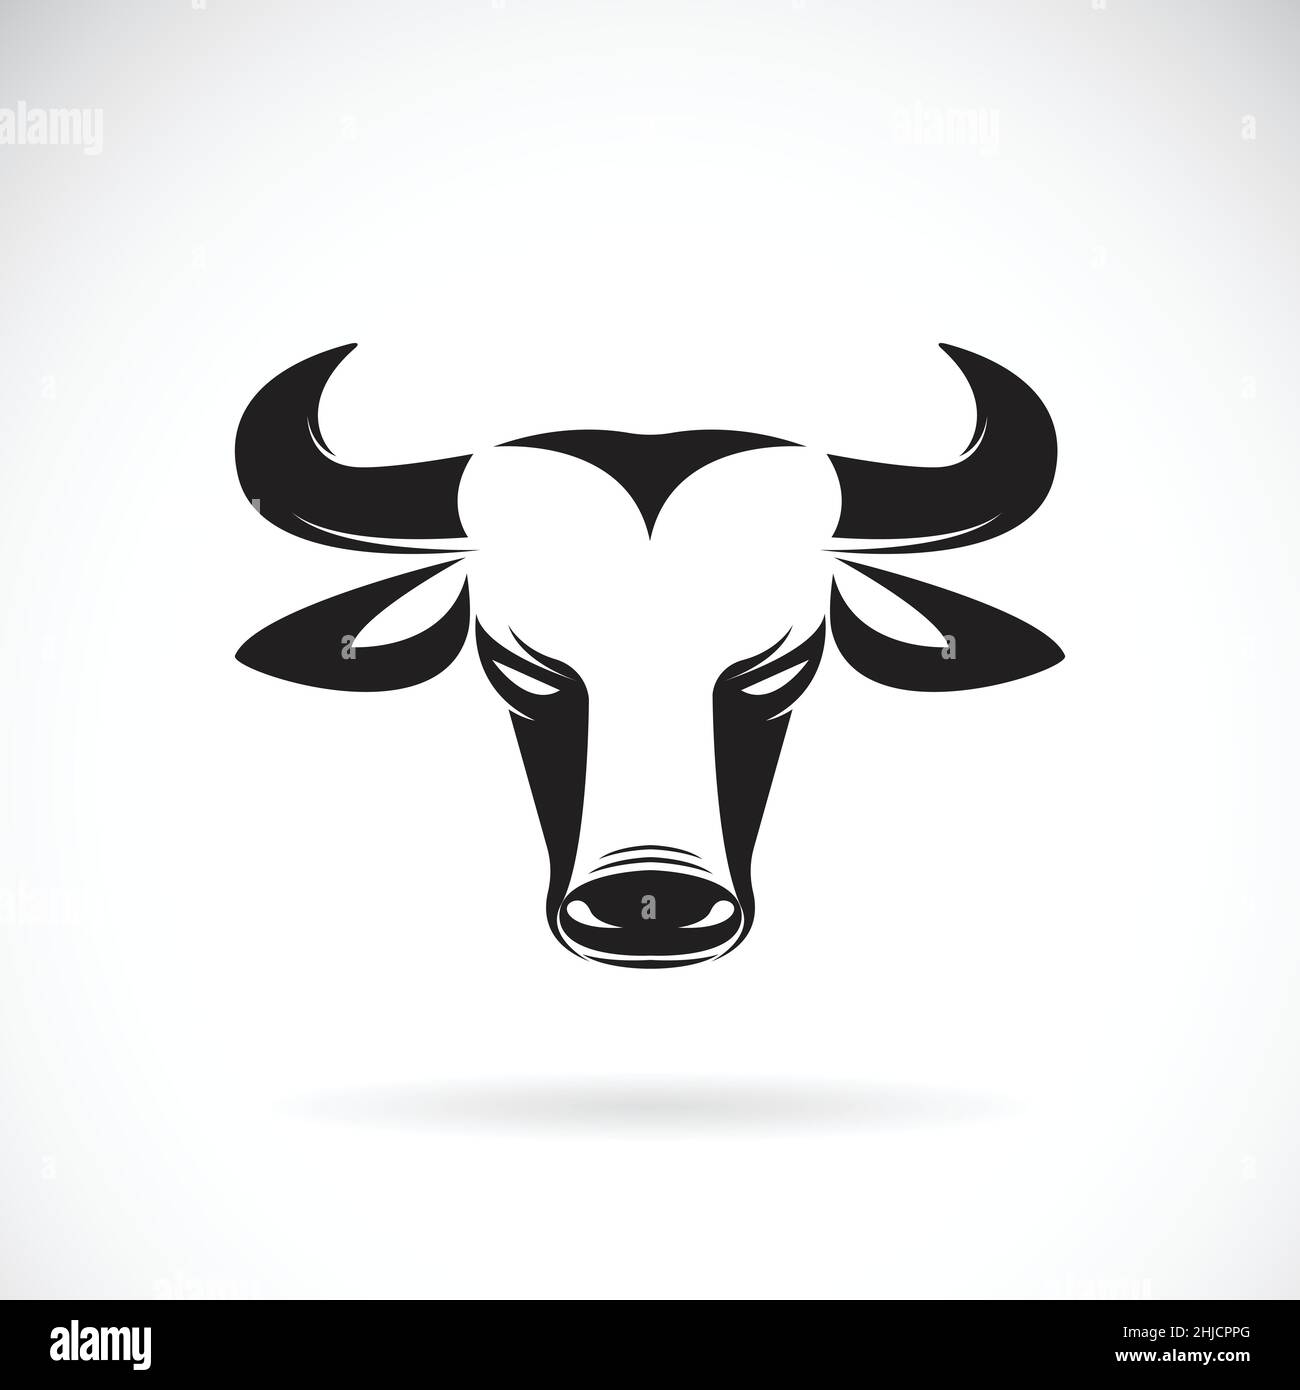 Vector of bull haed on white background. Easy editable layered vector illustration. Stock Vector